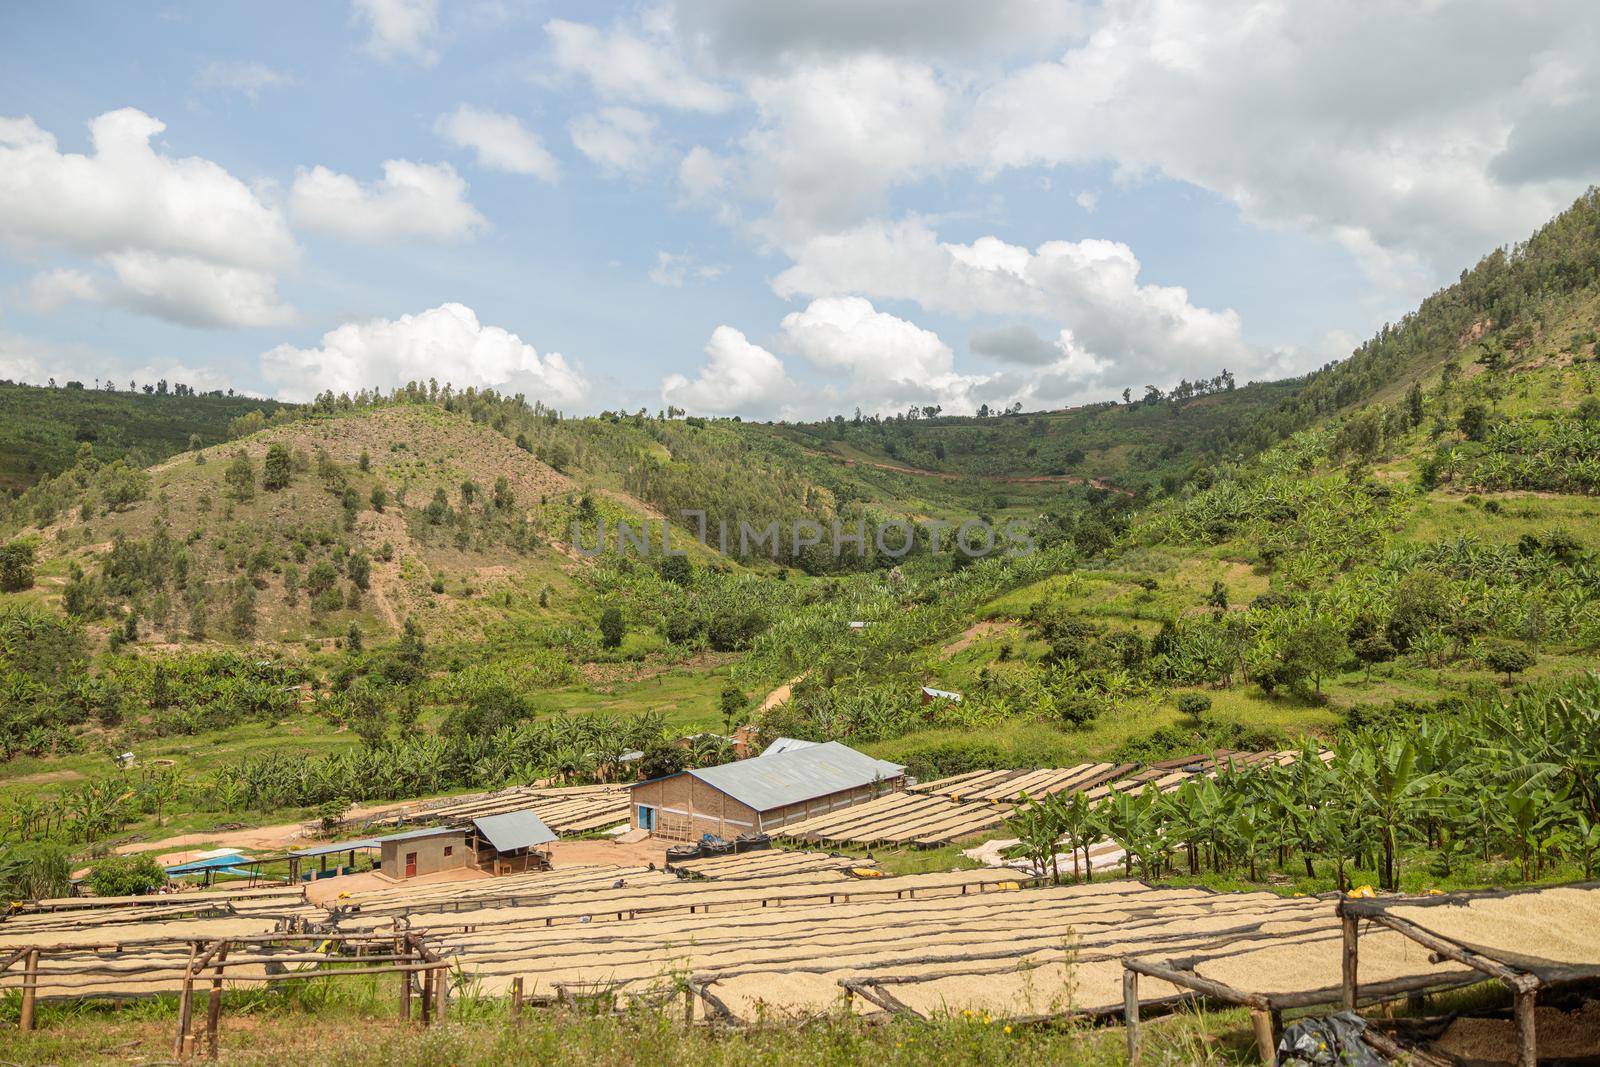 Small coffee processing farm in the mountains, Rwanda